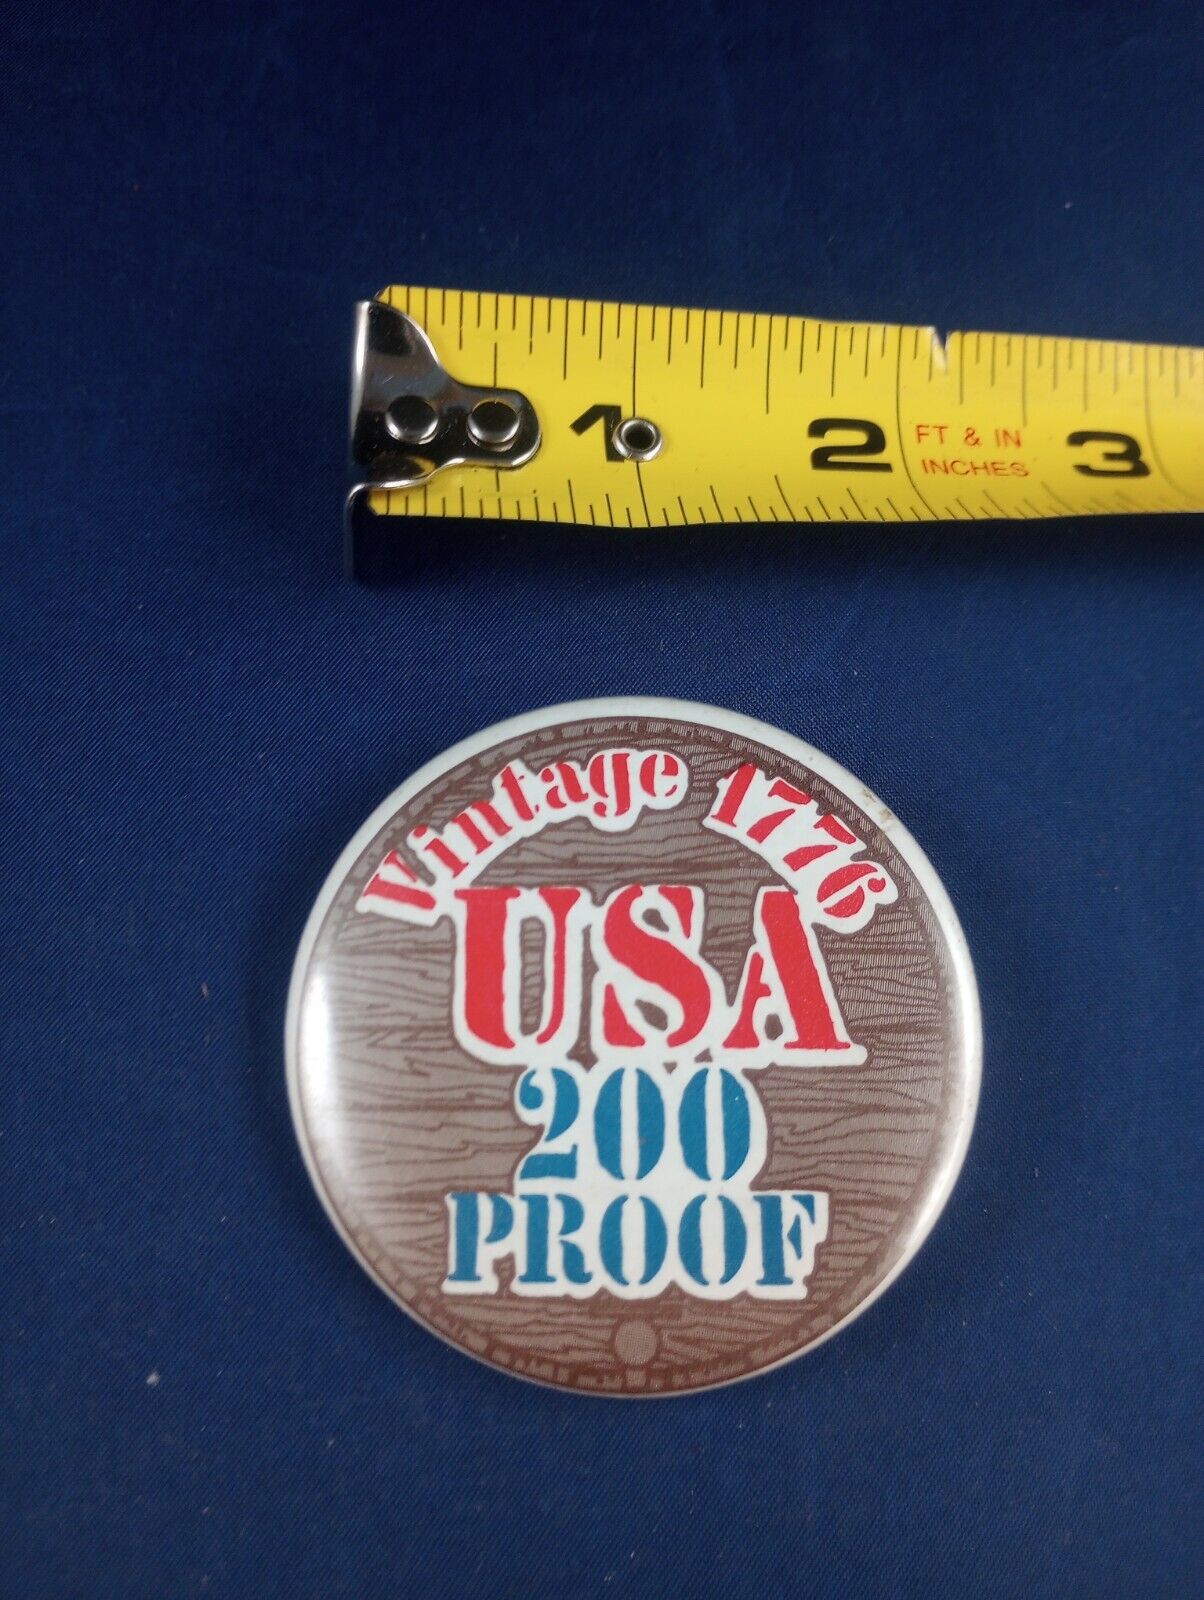 Vintage 1776 USA 200 PROOF Pin Button Pinback    *125-X